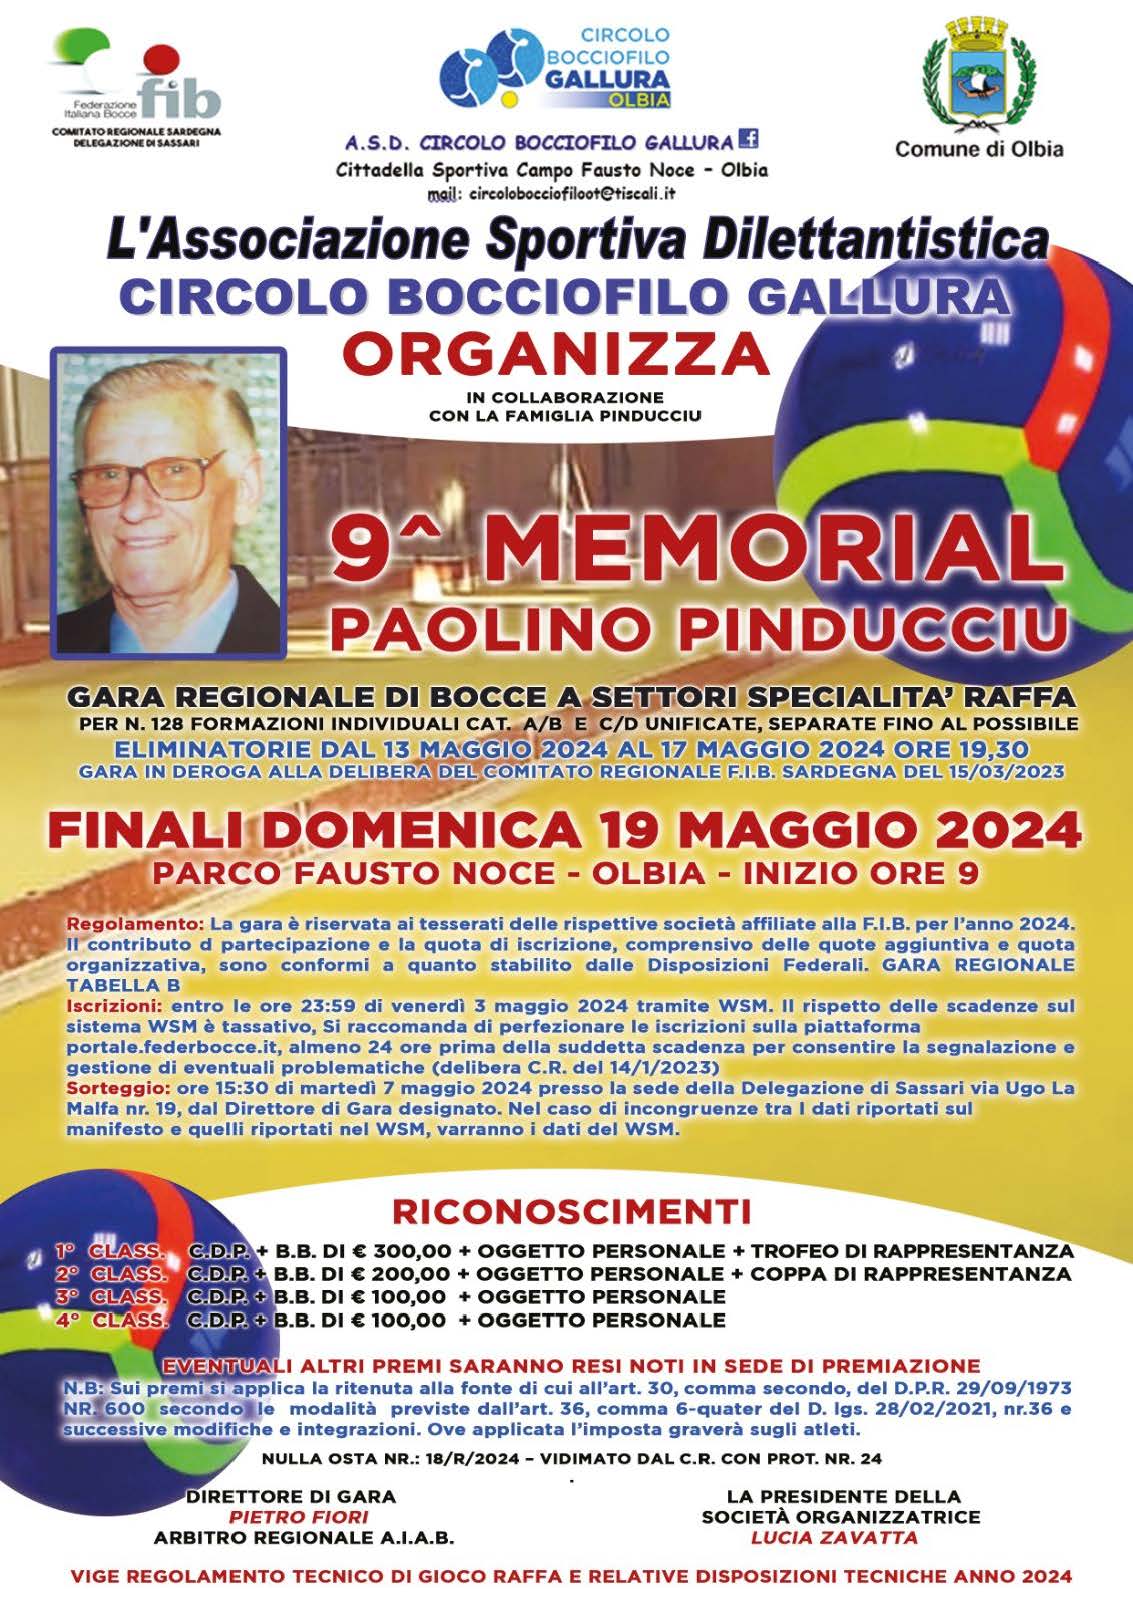 9 MEMORIAL PAOLINO PINDUCCIO GALLURA